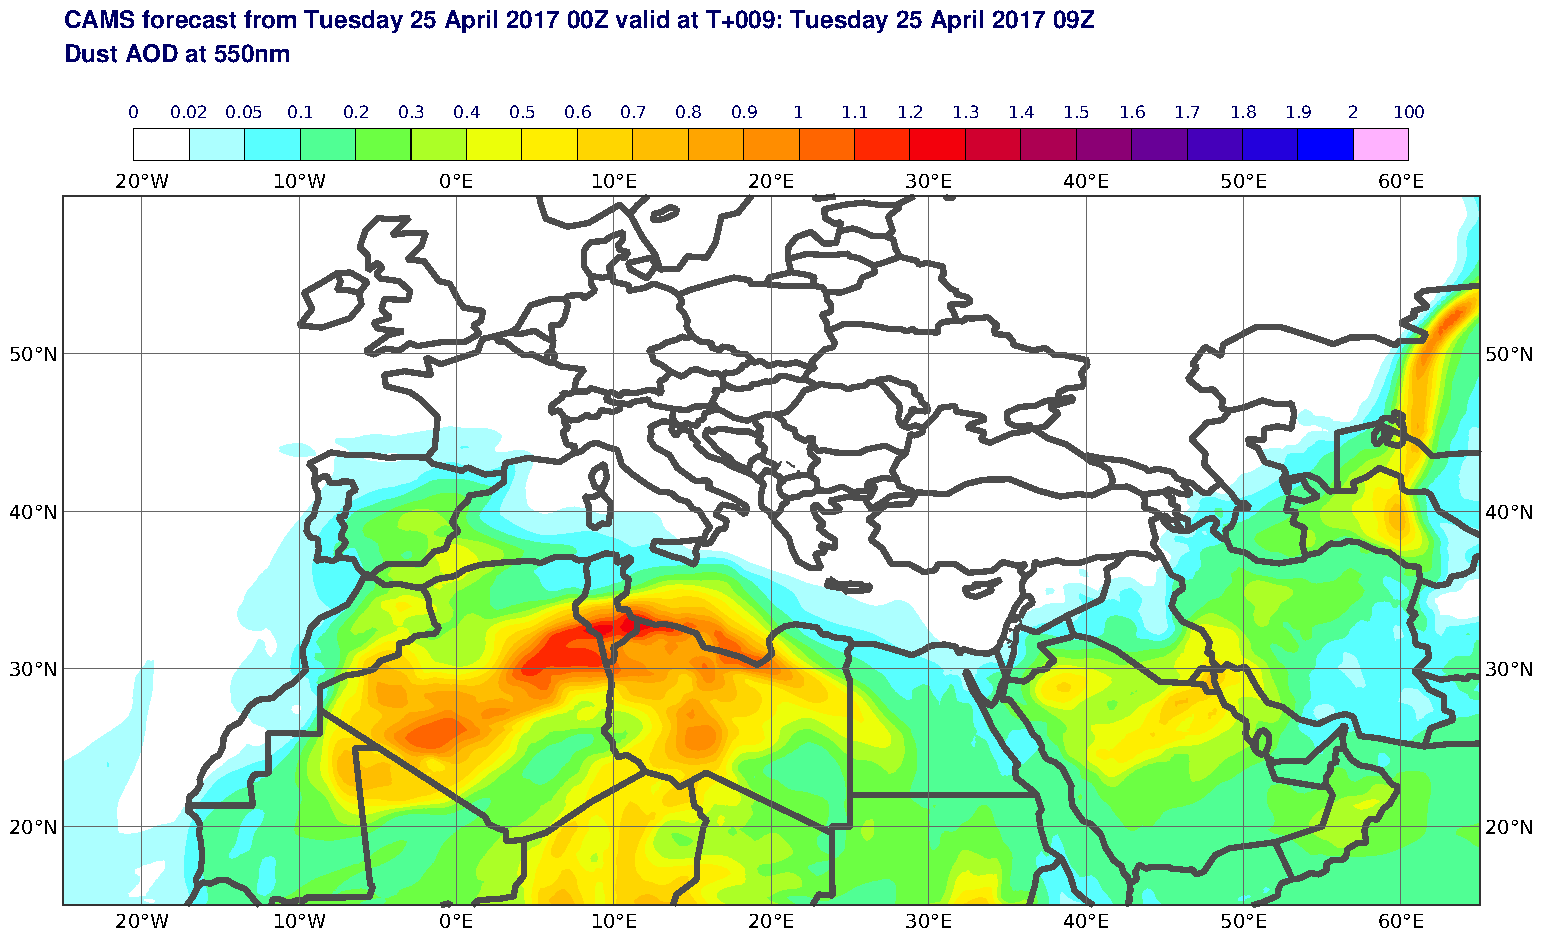 Dust AOD at 550nm valid at T9 - 2017-04-25 09:00